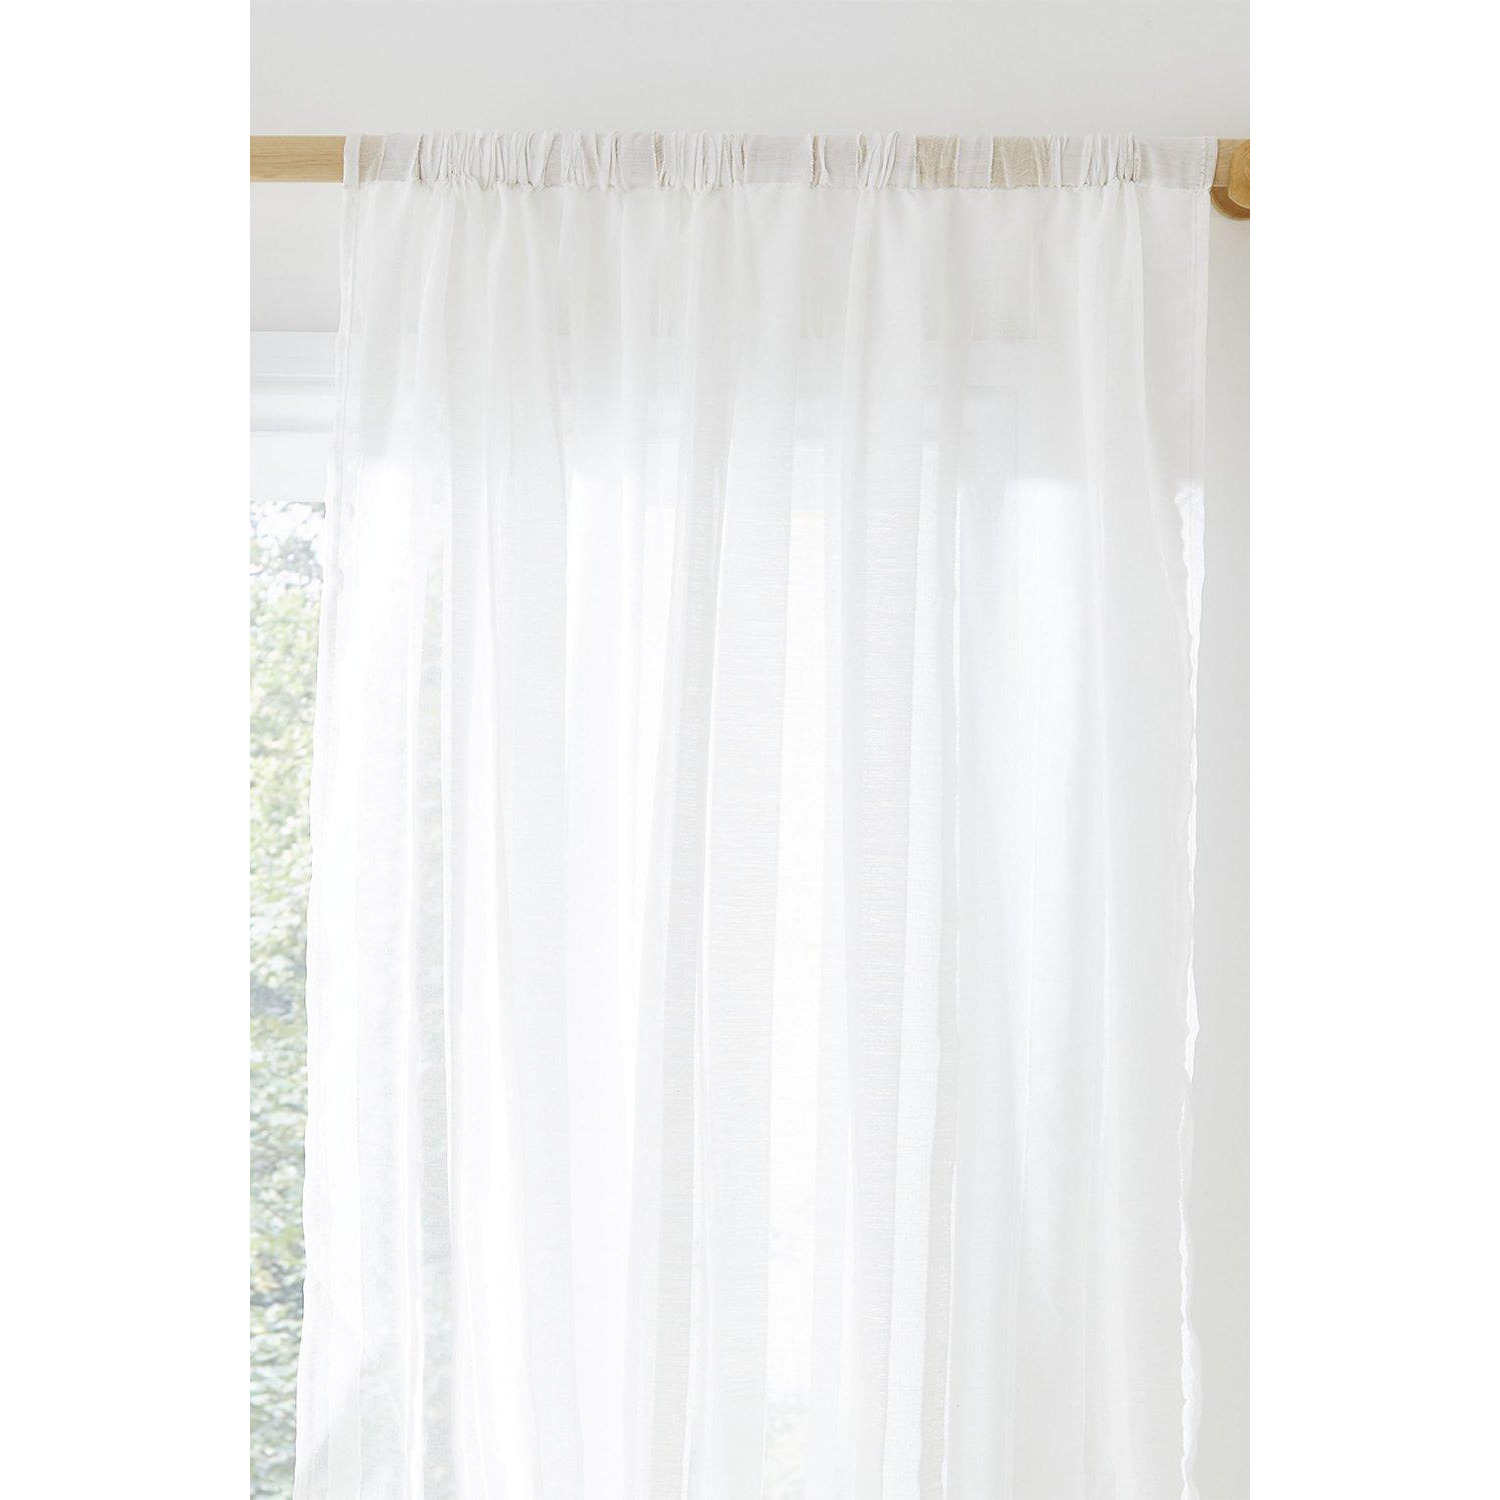 'Aletta Tufted Stripe' Voile Curtain Panel - image 1